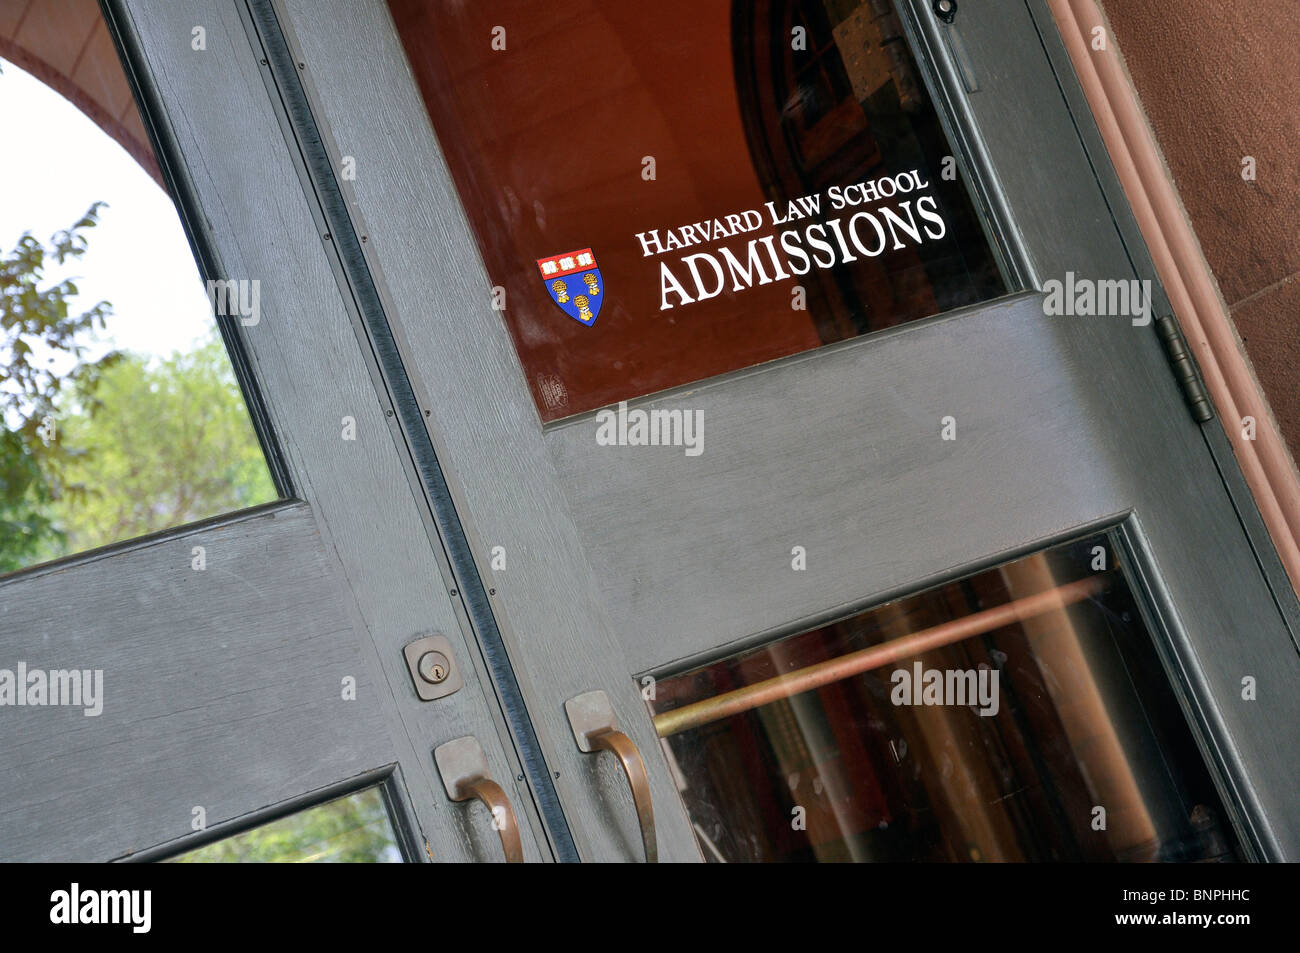 Law School Admissions building, Harvard University, Cambridge, Massachusetts, USA Stock Photo